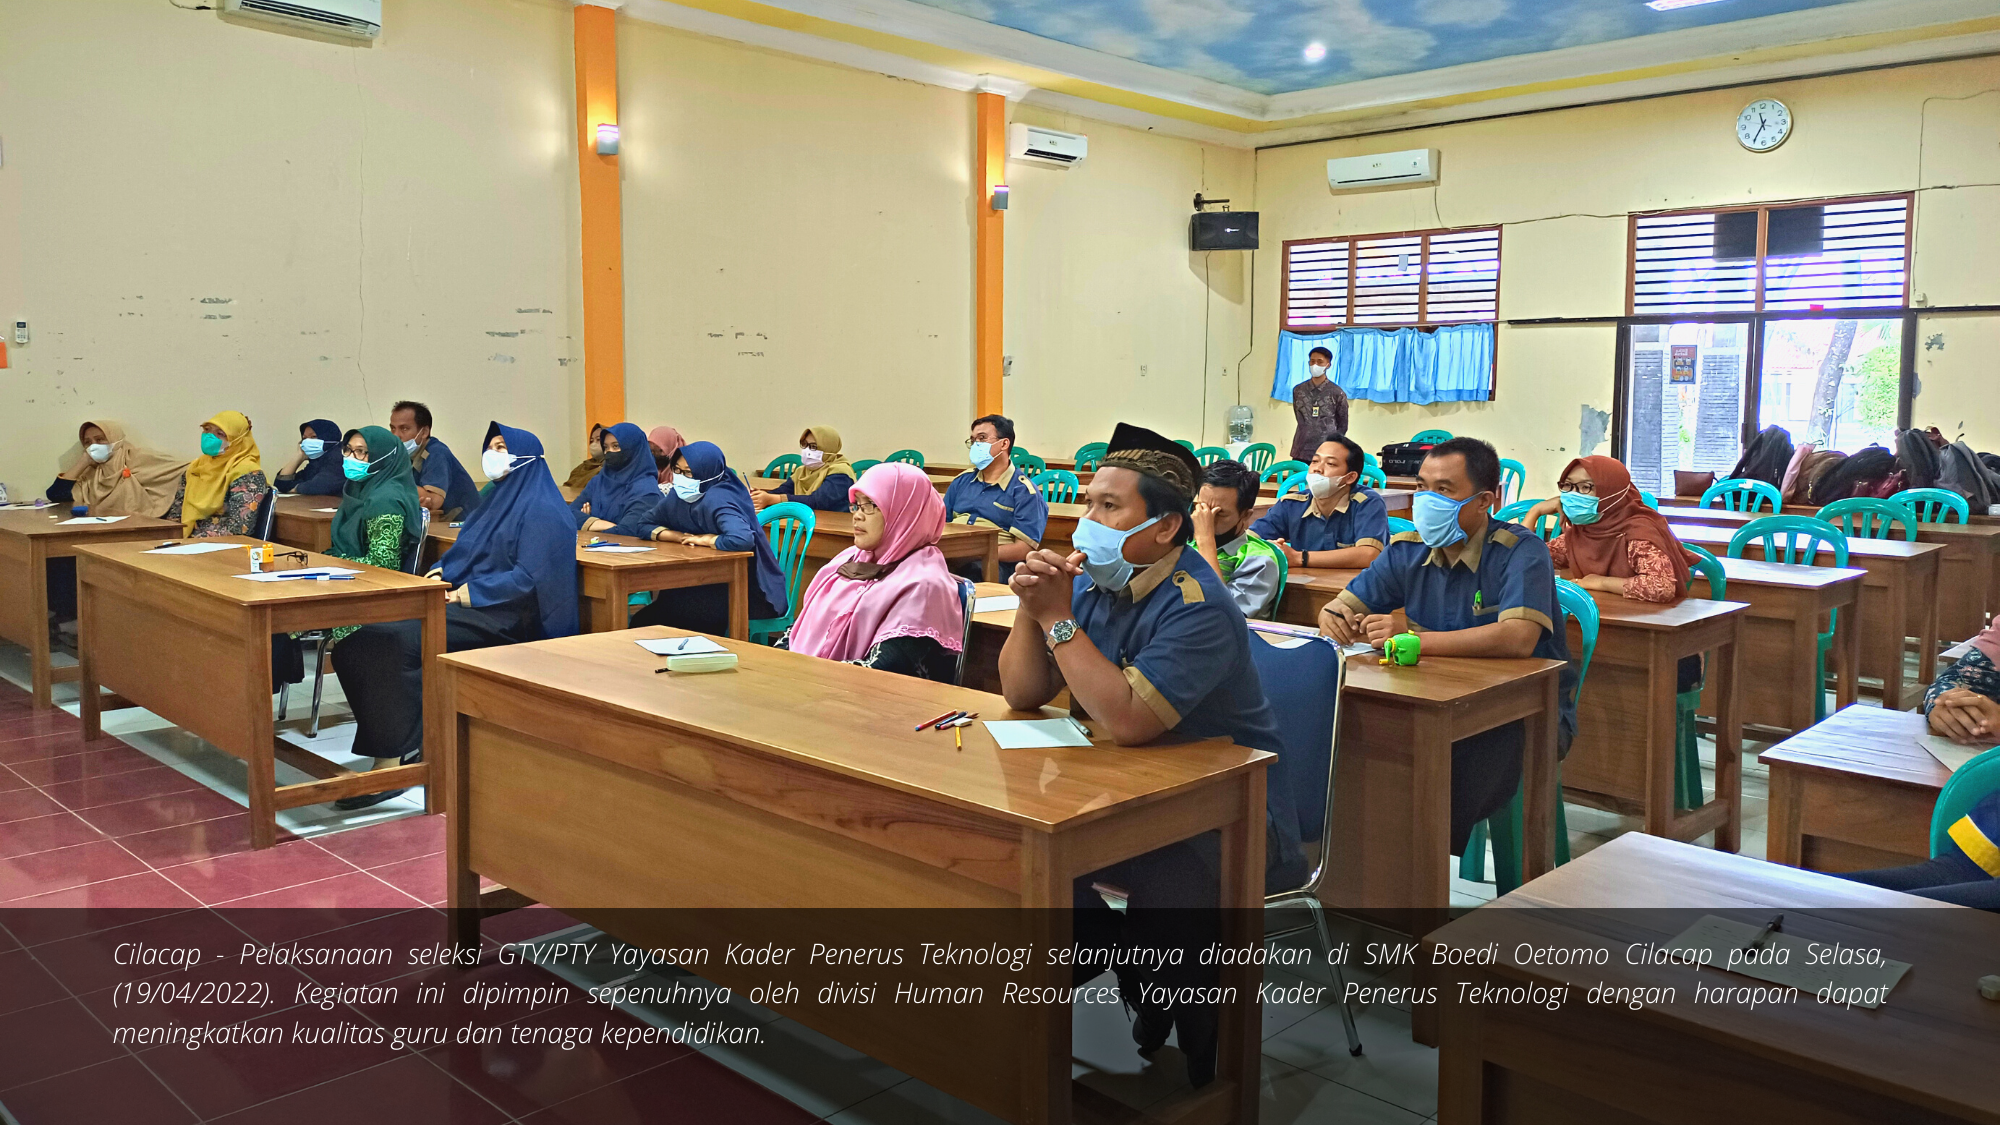 Komitmen Meningkatkan Kualitas Guru dan Tenaga Kependidikan, Yayasan Kader Penerus Teknologi Mengadakan Seleksi GTY/PTY Selanjutnya di SMK Boedi Oetomo Cilacap